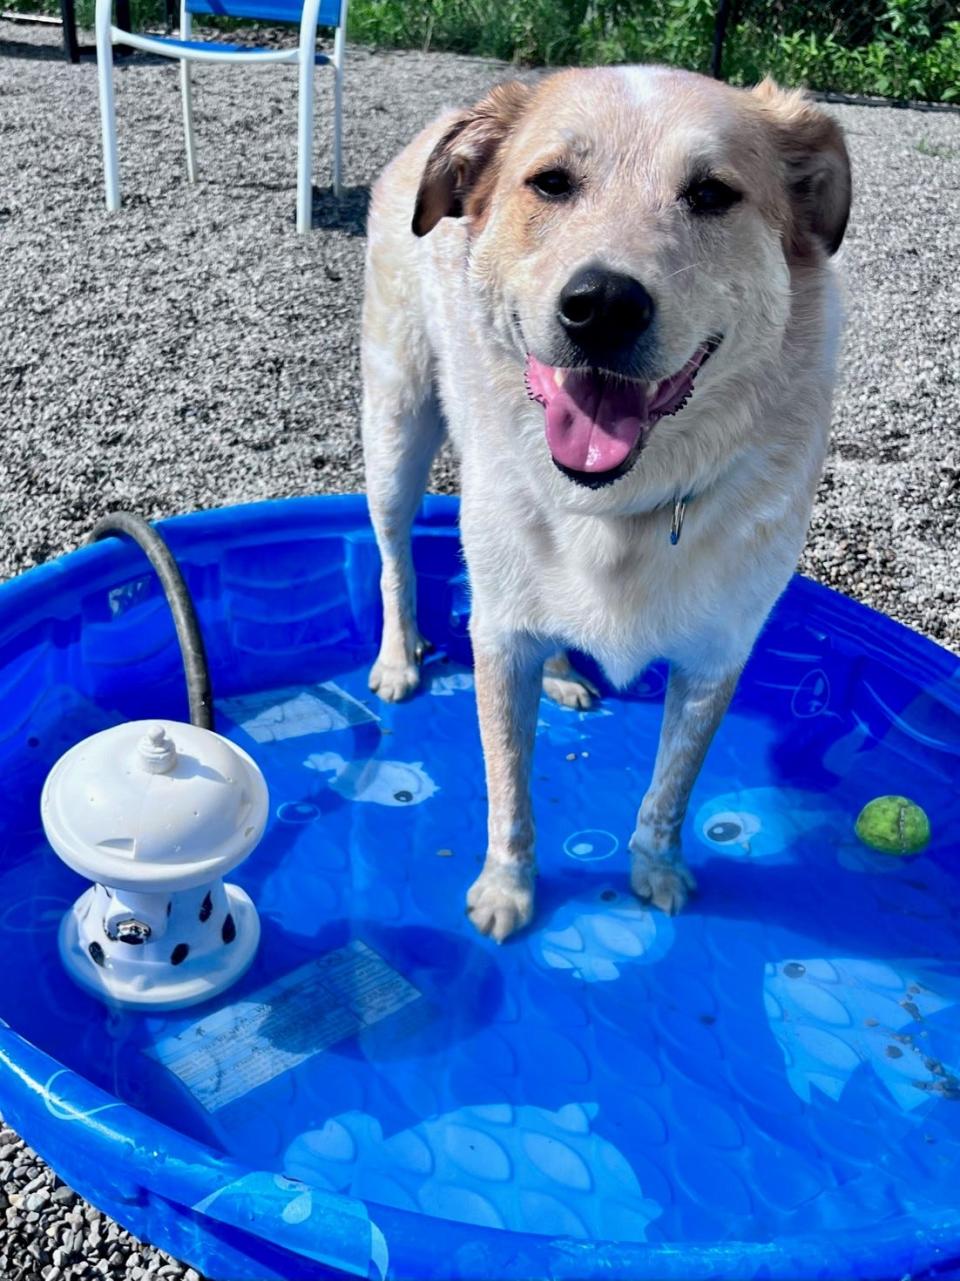 Kodi enjoys the pool with the fire hydrant sprinkler at the Glen Rock Dog Park